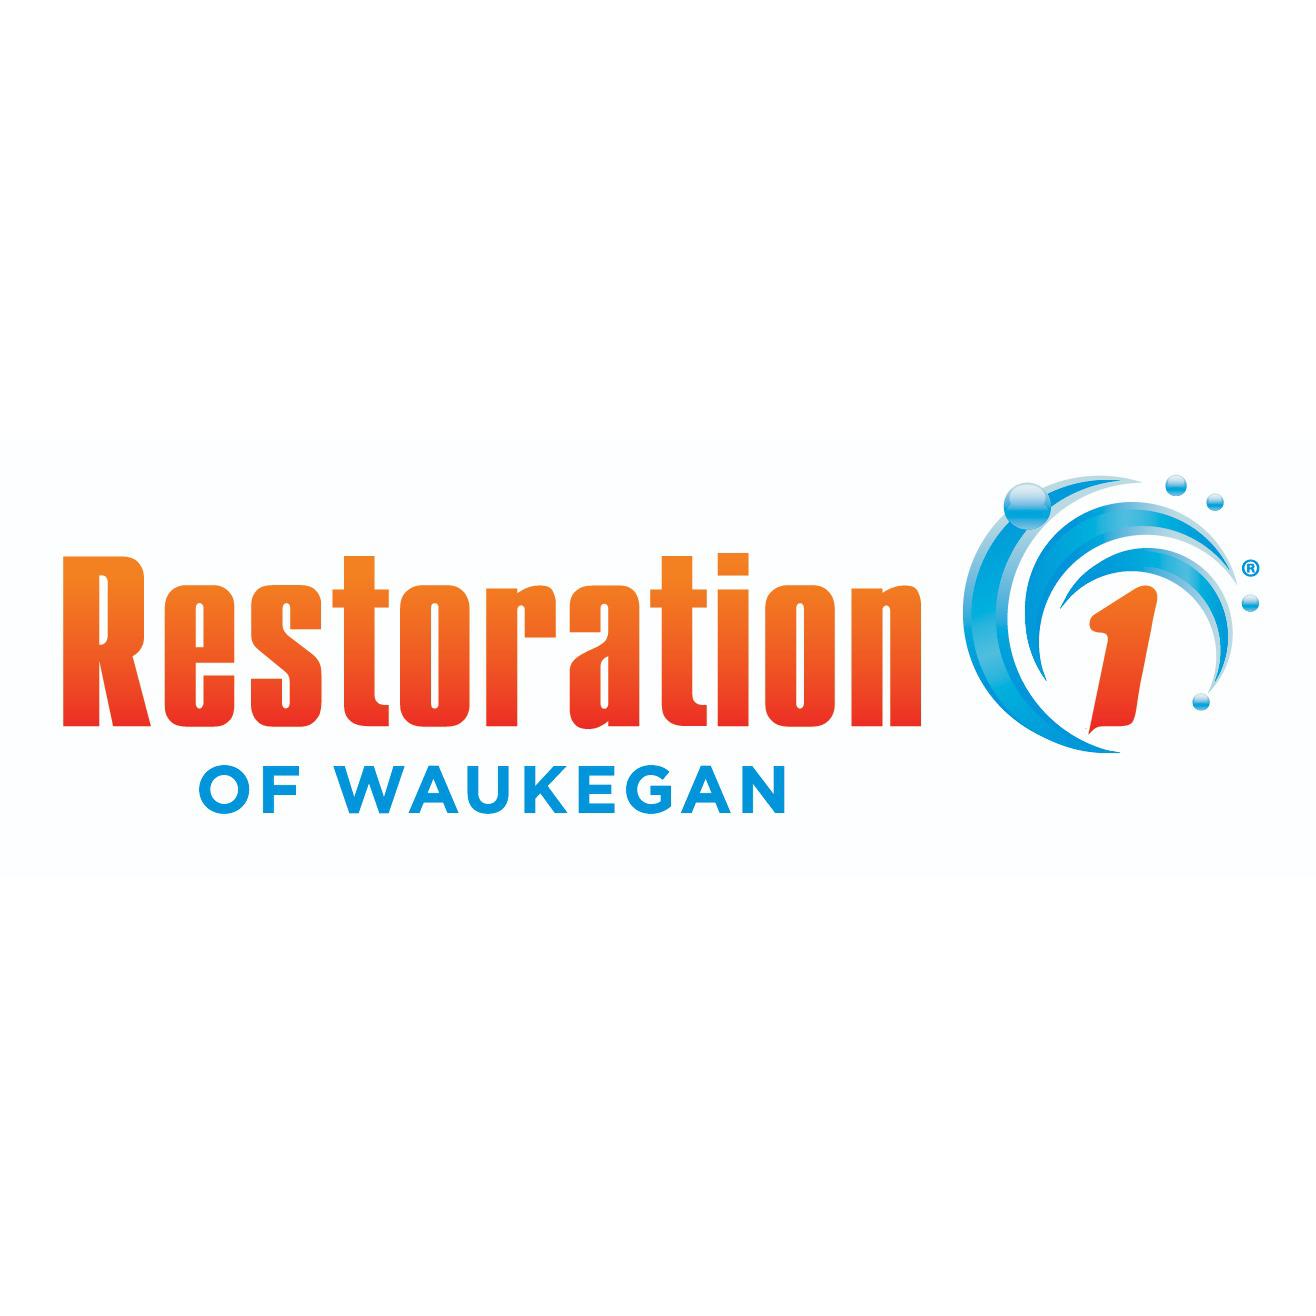 Restoration 1 of Waukegan